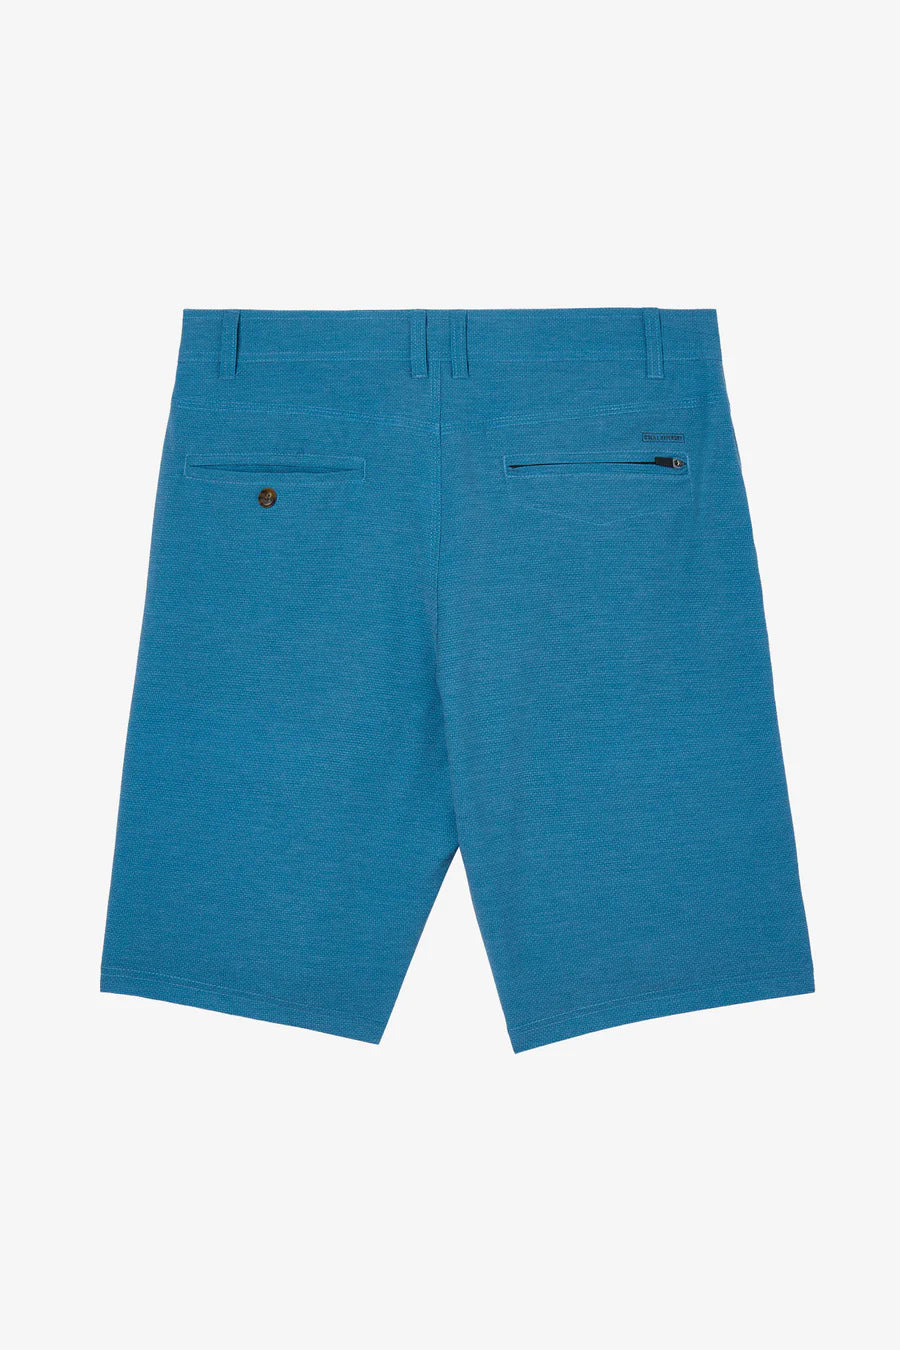 Stockton Print 20" Hybrid Shorts - Bay Blue